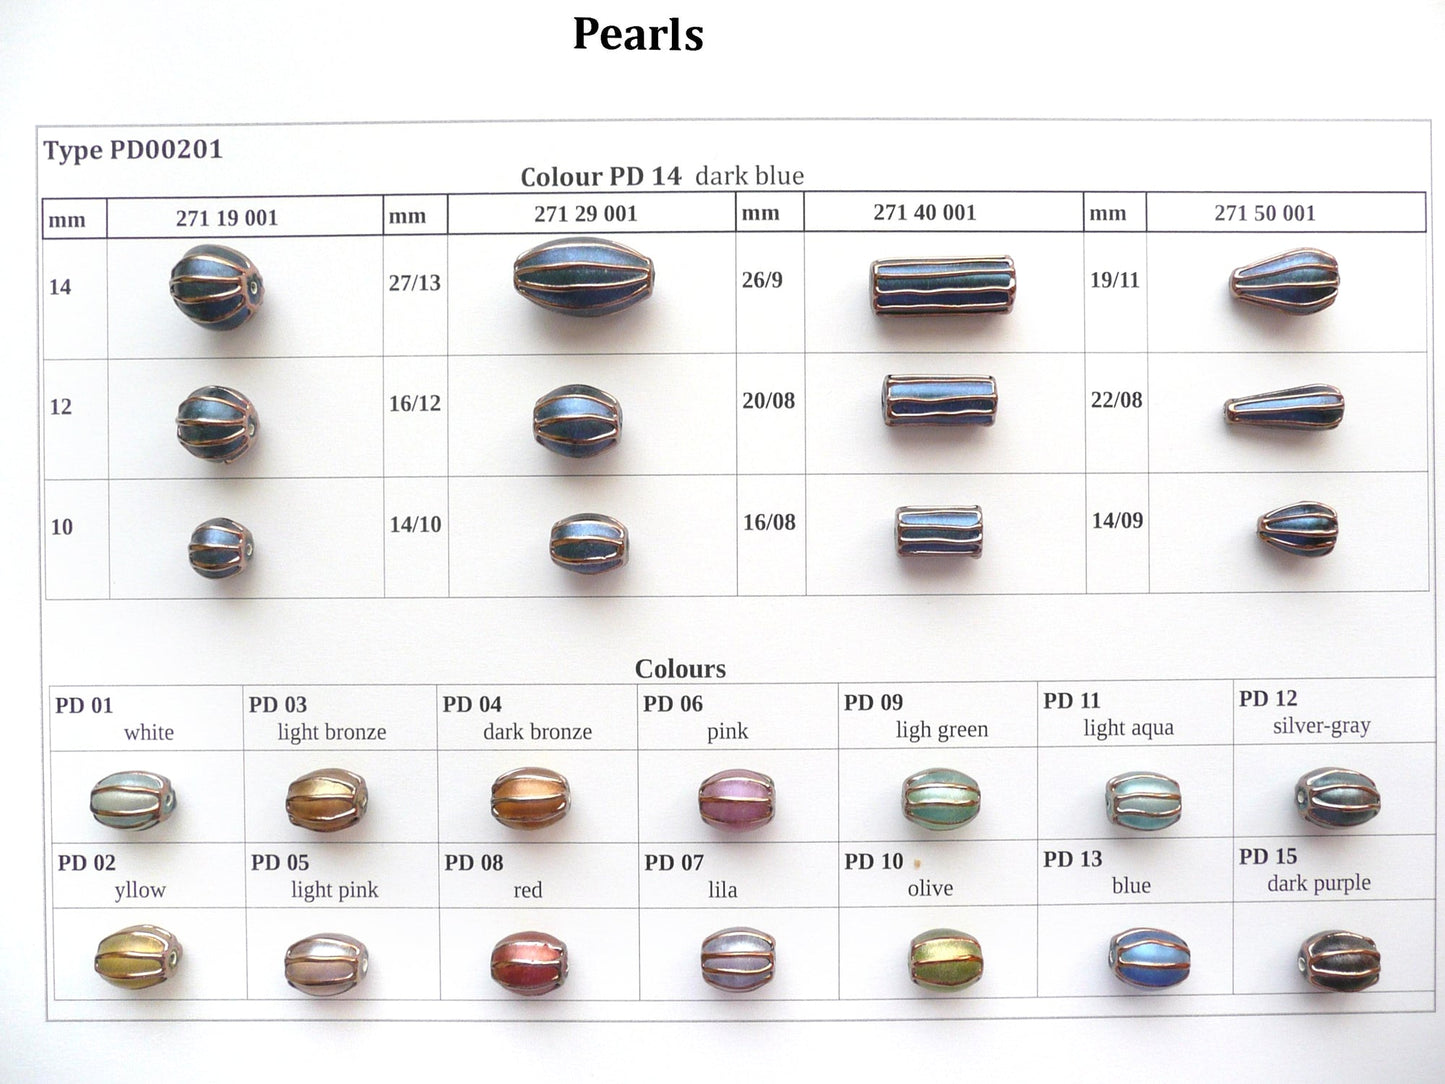 30 pcs Lampwork Beads Pearl Decor PD201 / Teardrop/Pear (271-50-001), Handmade, Preciosa Glass, Czech Republic